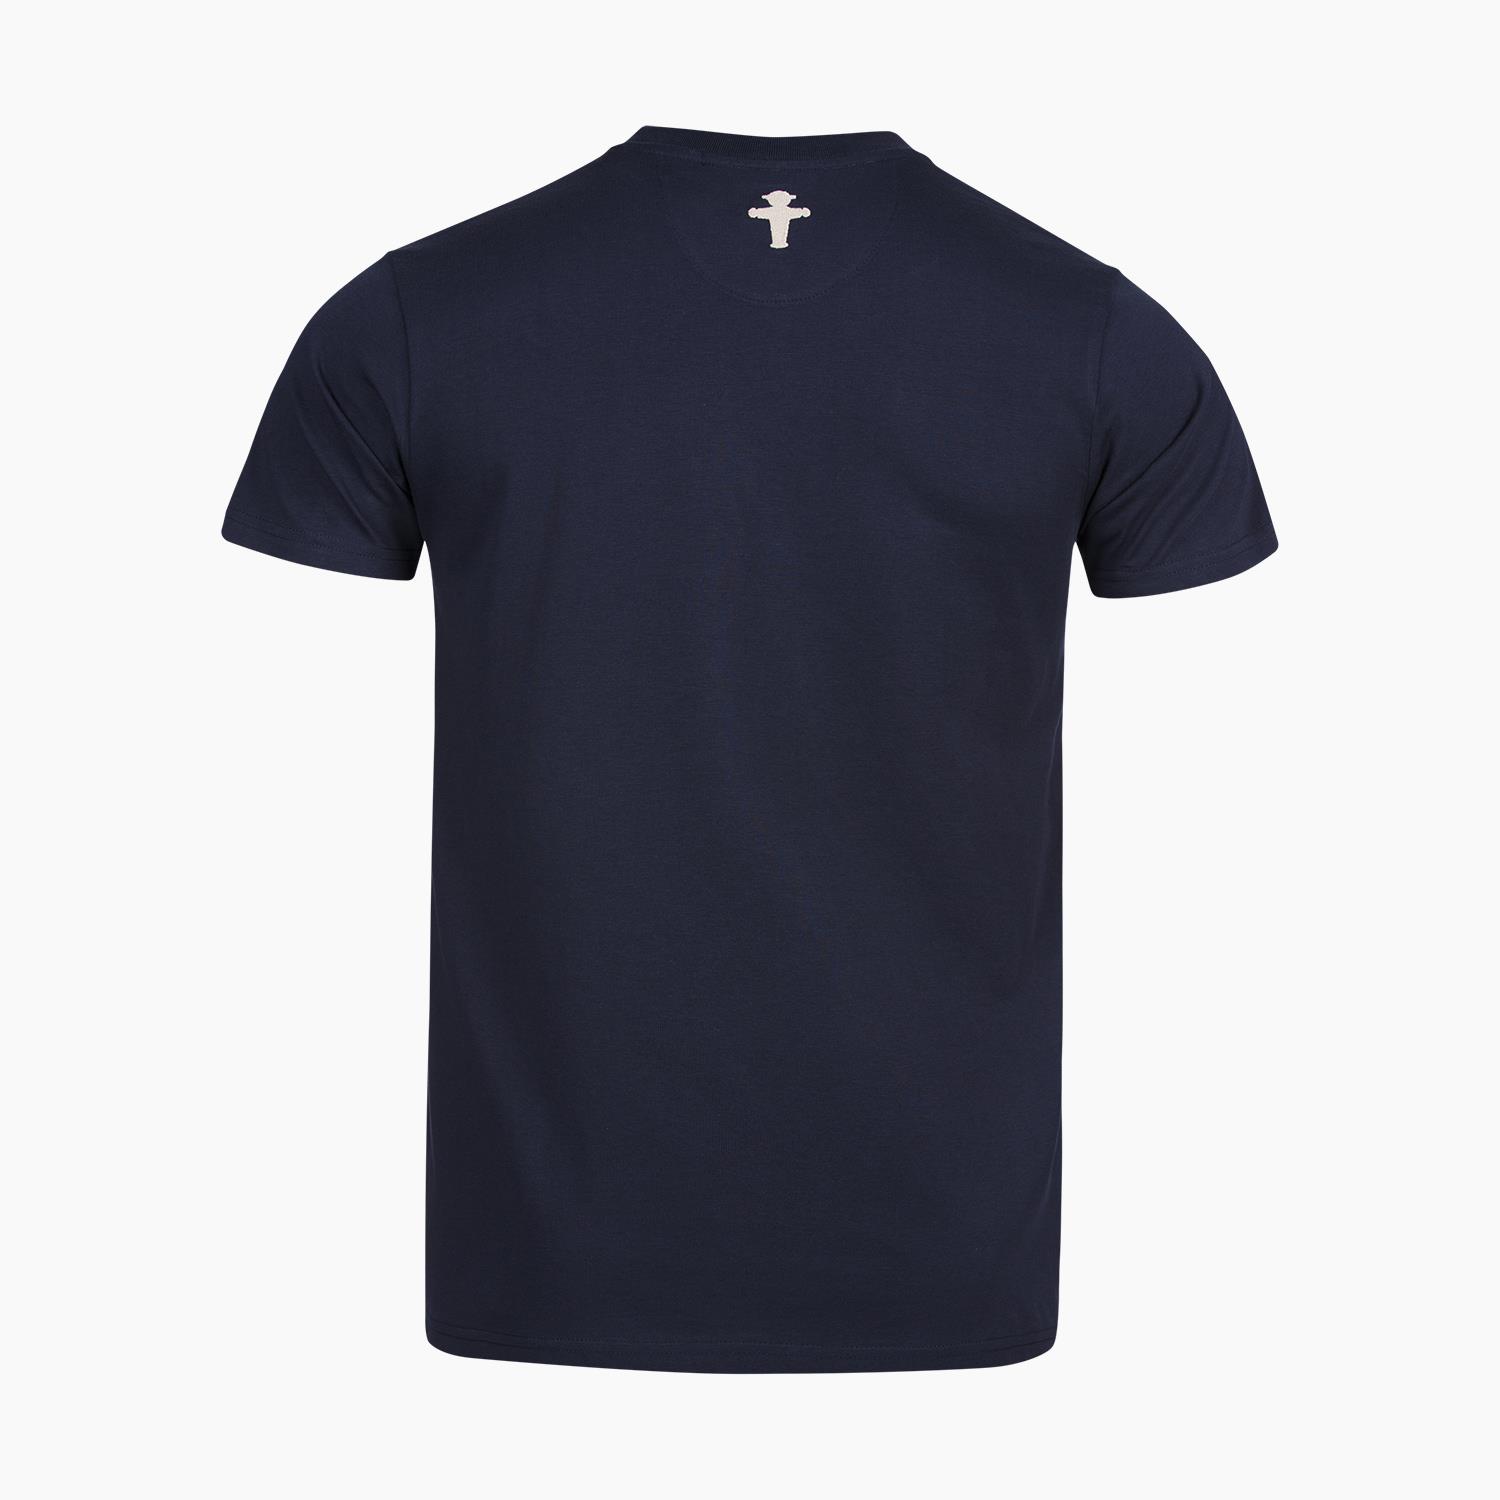 AUFSCHNEIDER S/ T-Shirt